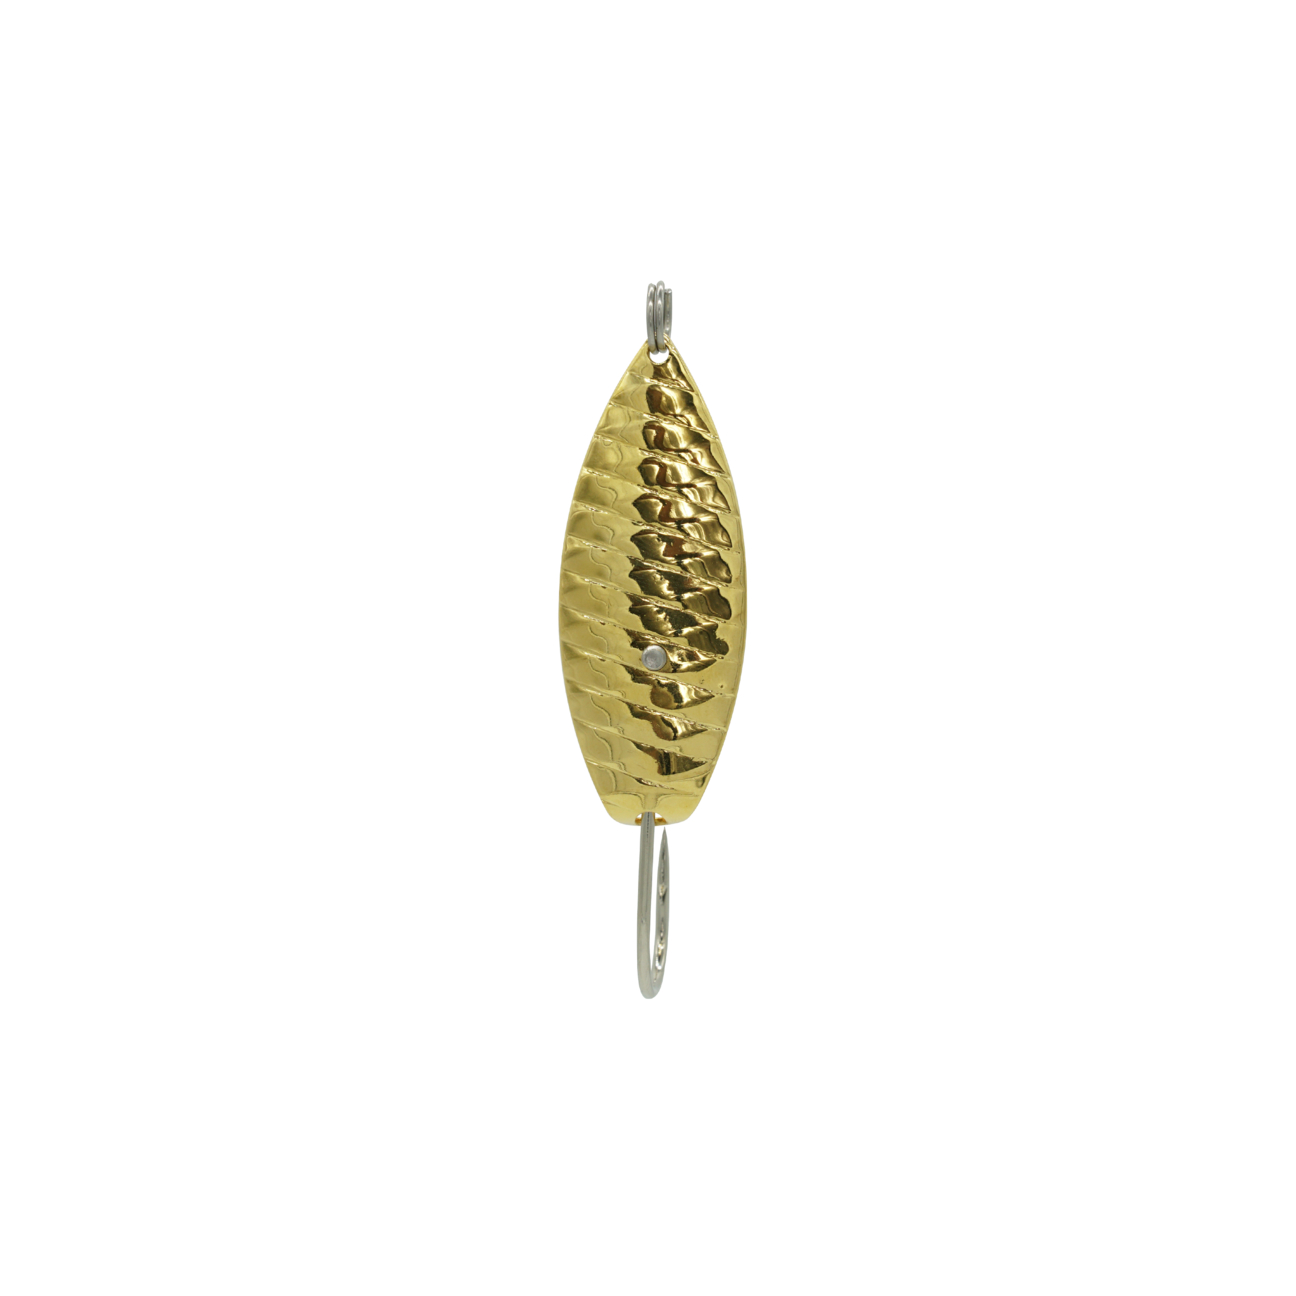 Aqua Dream Weedless Spoon -1/4oz - 24K Gold